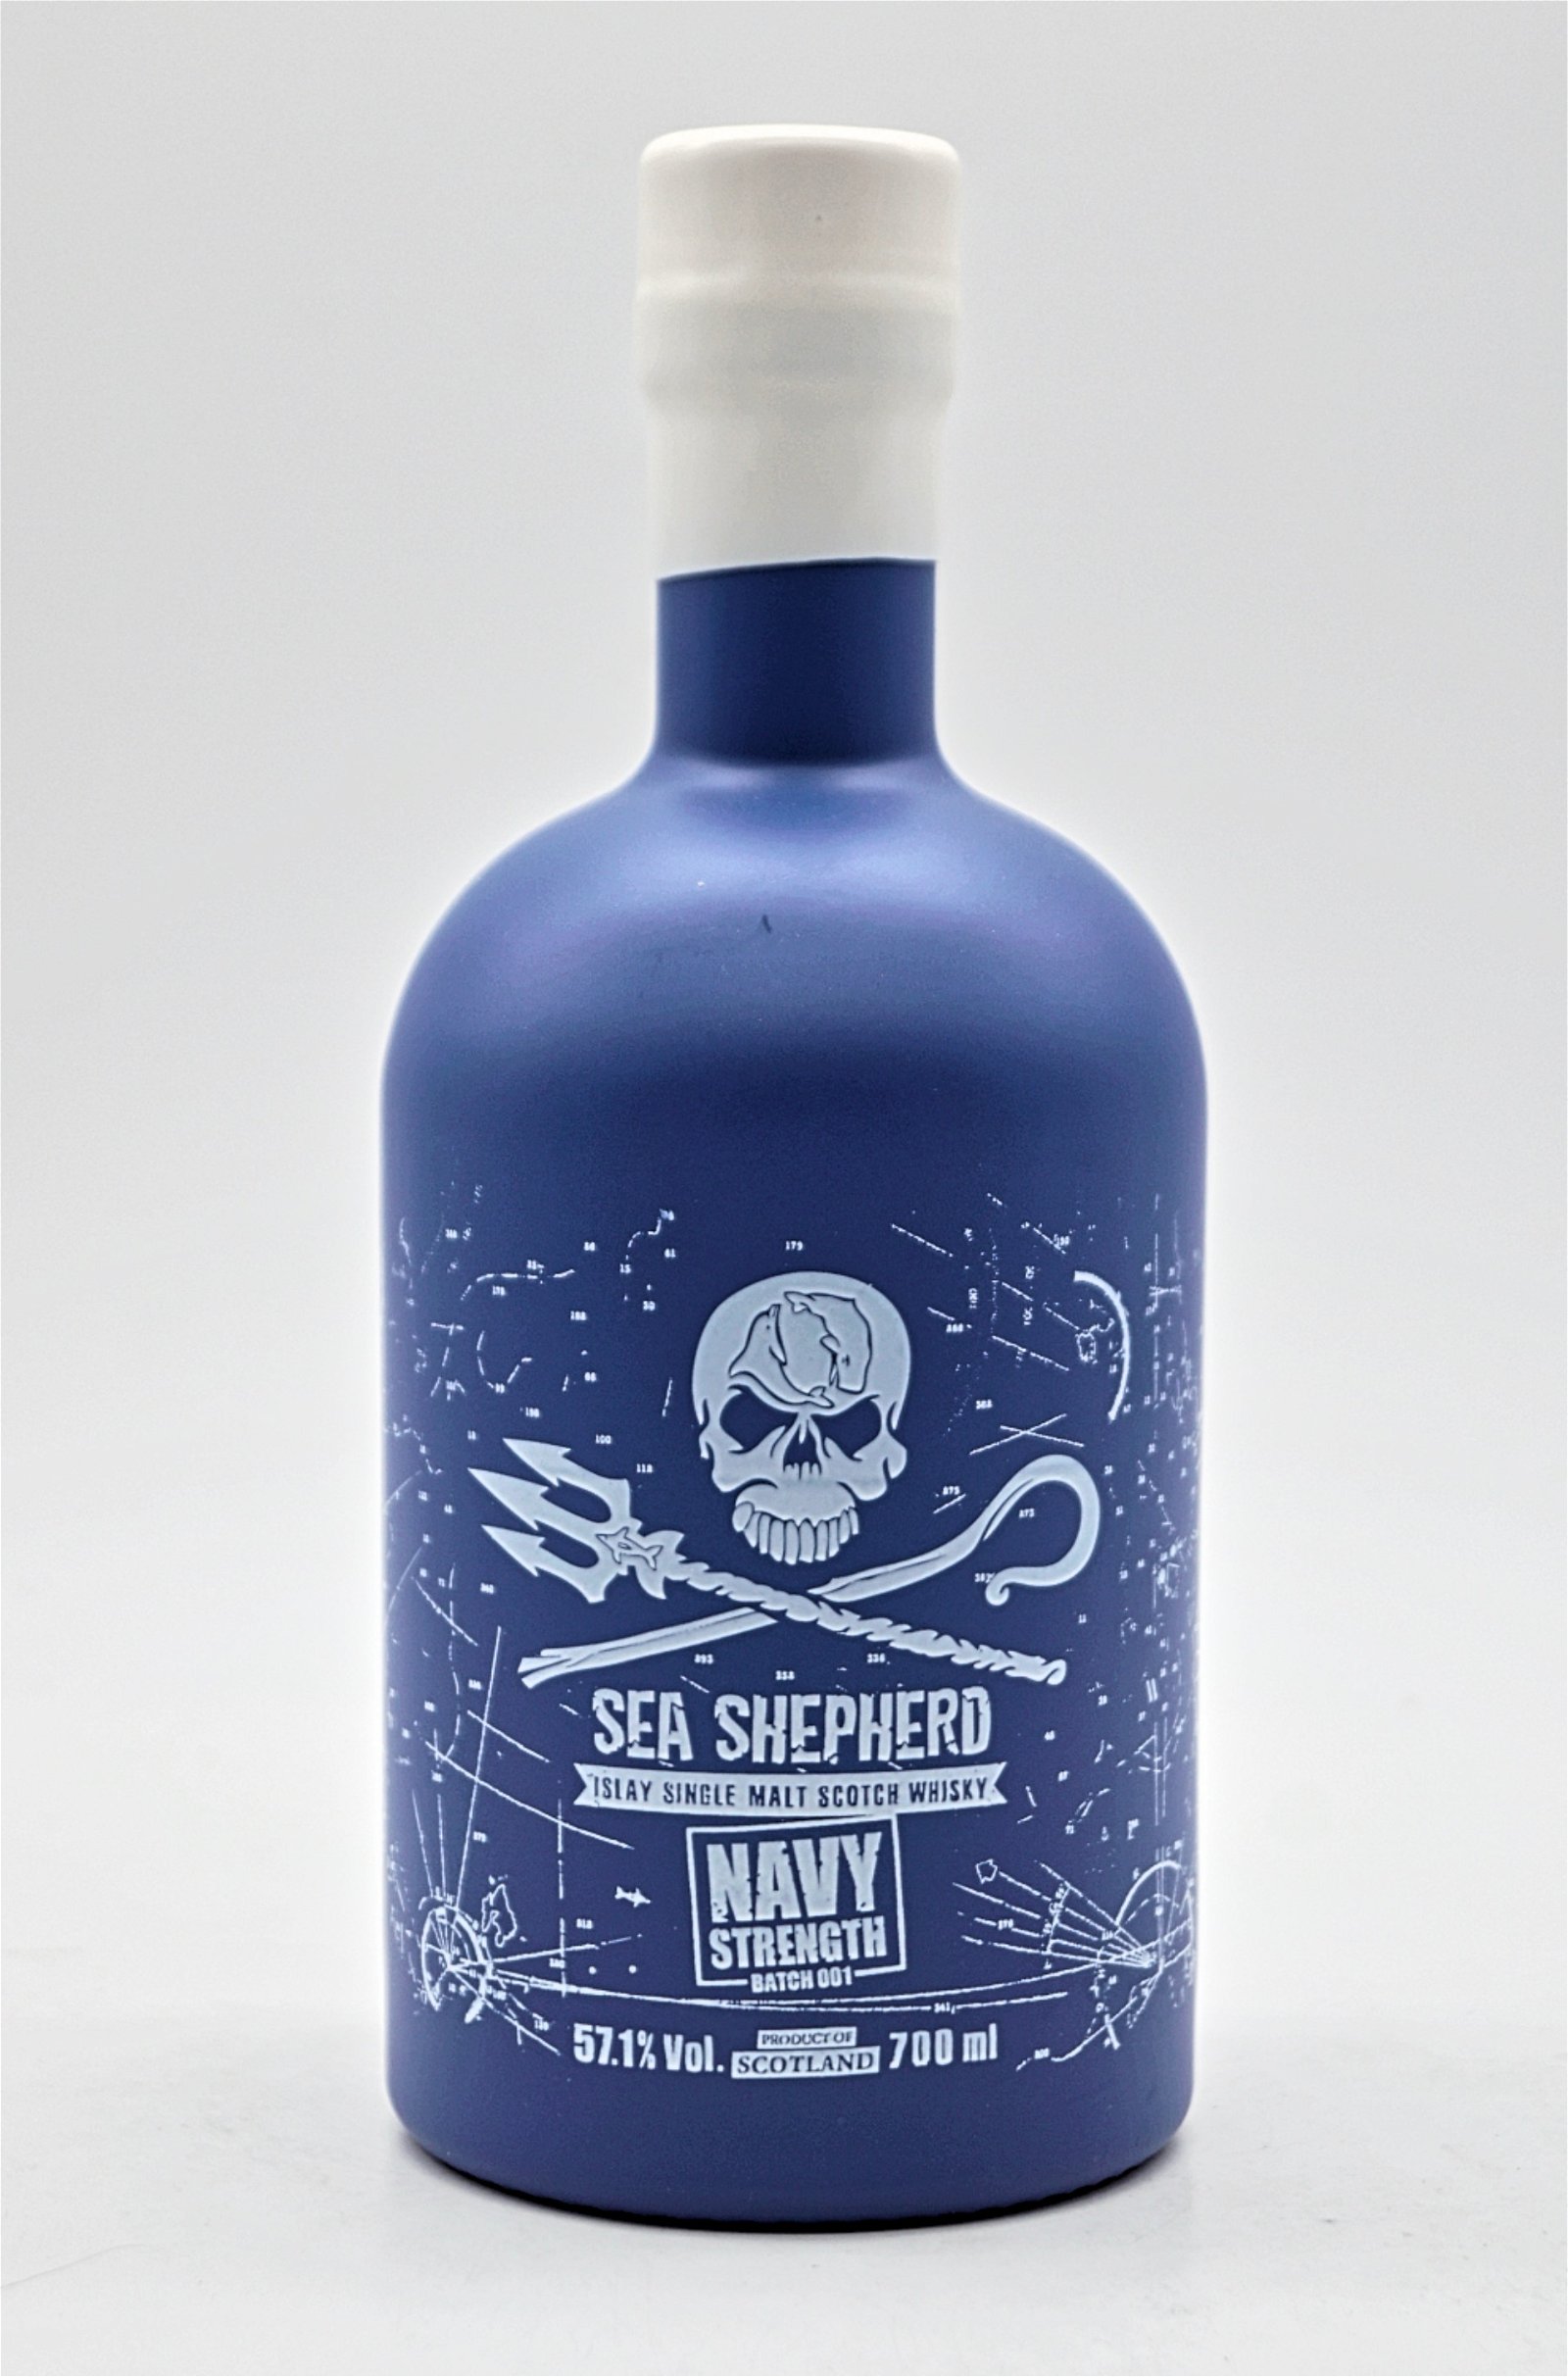 Sea Shepherd Navy Strength Batch 001 Islay Single Malt Scotch Whisky